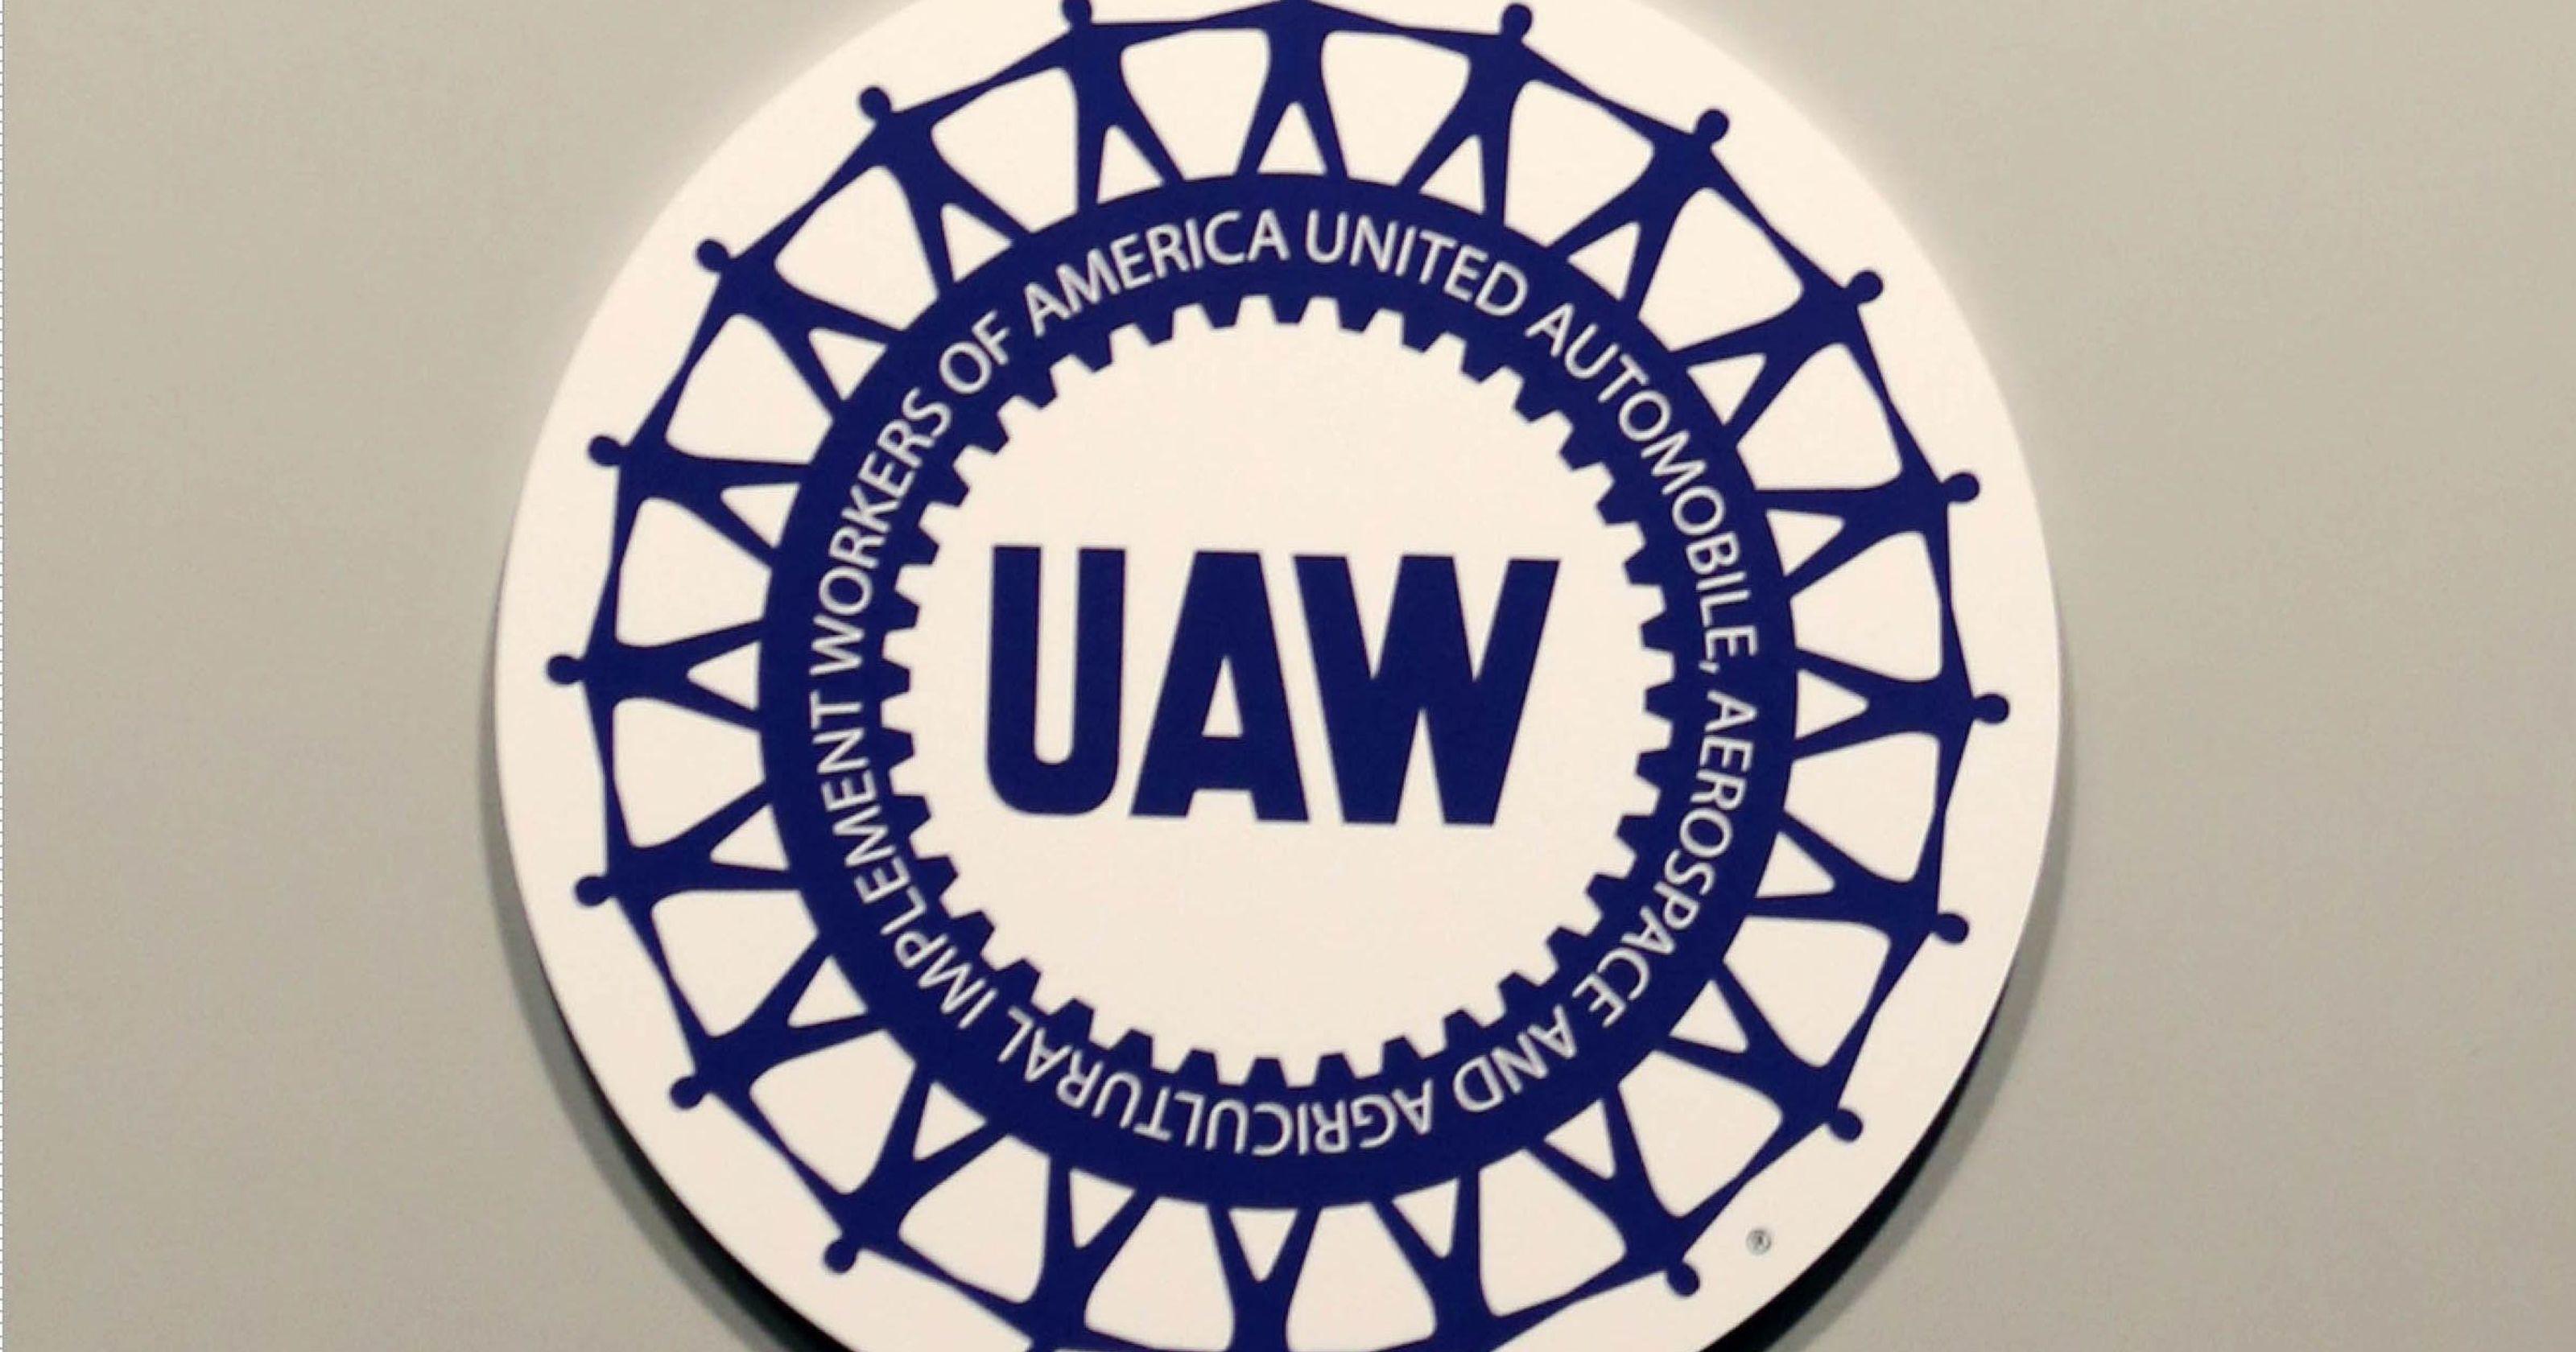 Local UAW Logo - How UAW keeps growing despite scandal, corruption